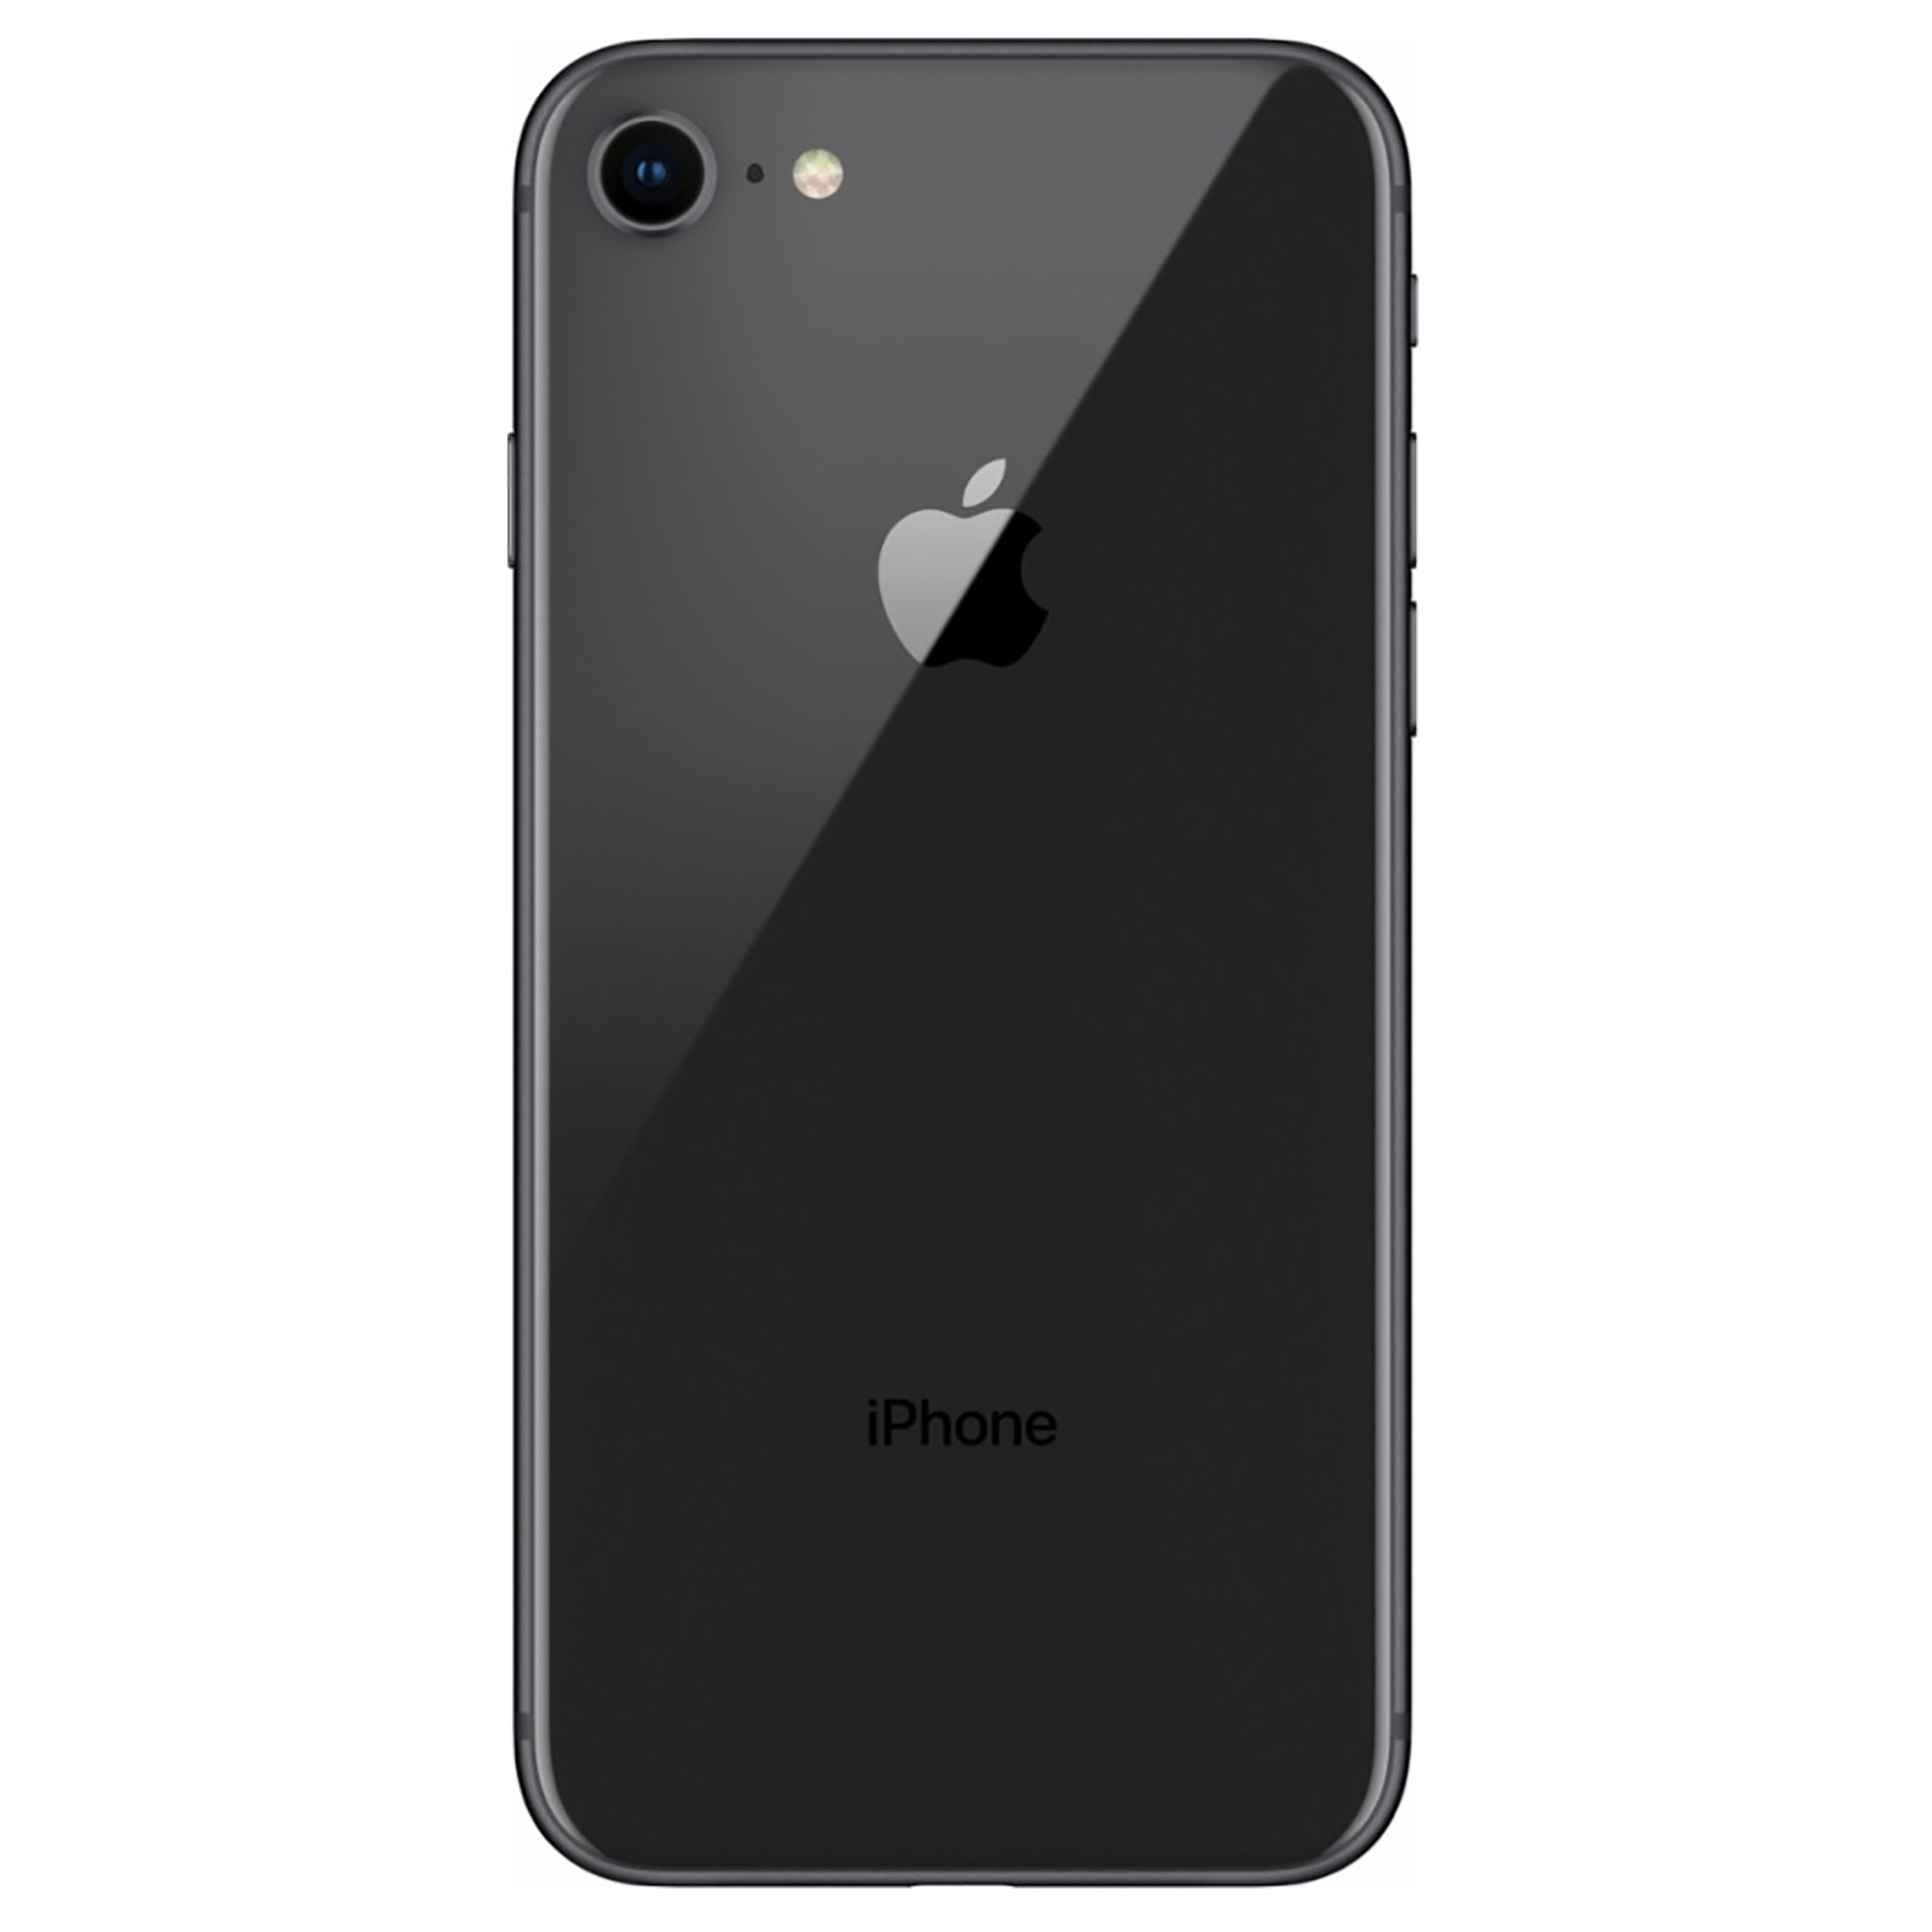 Restored Apple iPhone 8 64GB Space Gray GSM Unlocked Smartphone (Refurbished) - image 2 of 3